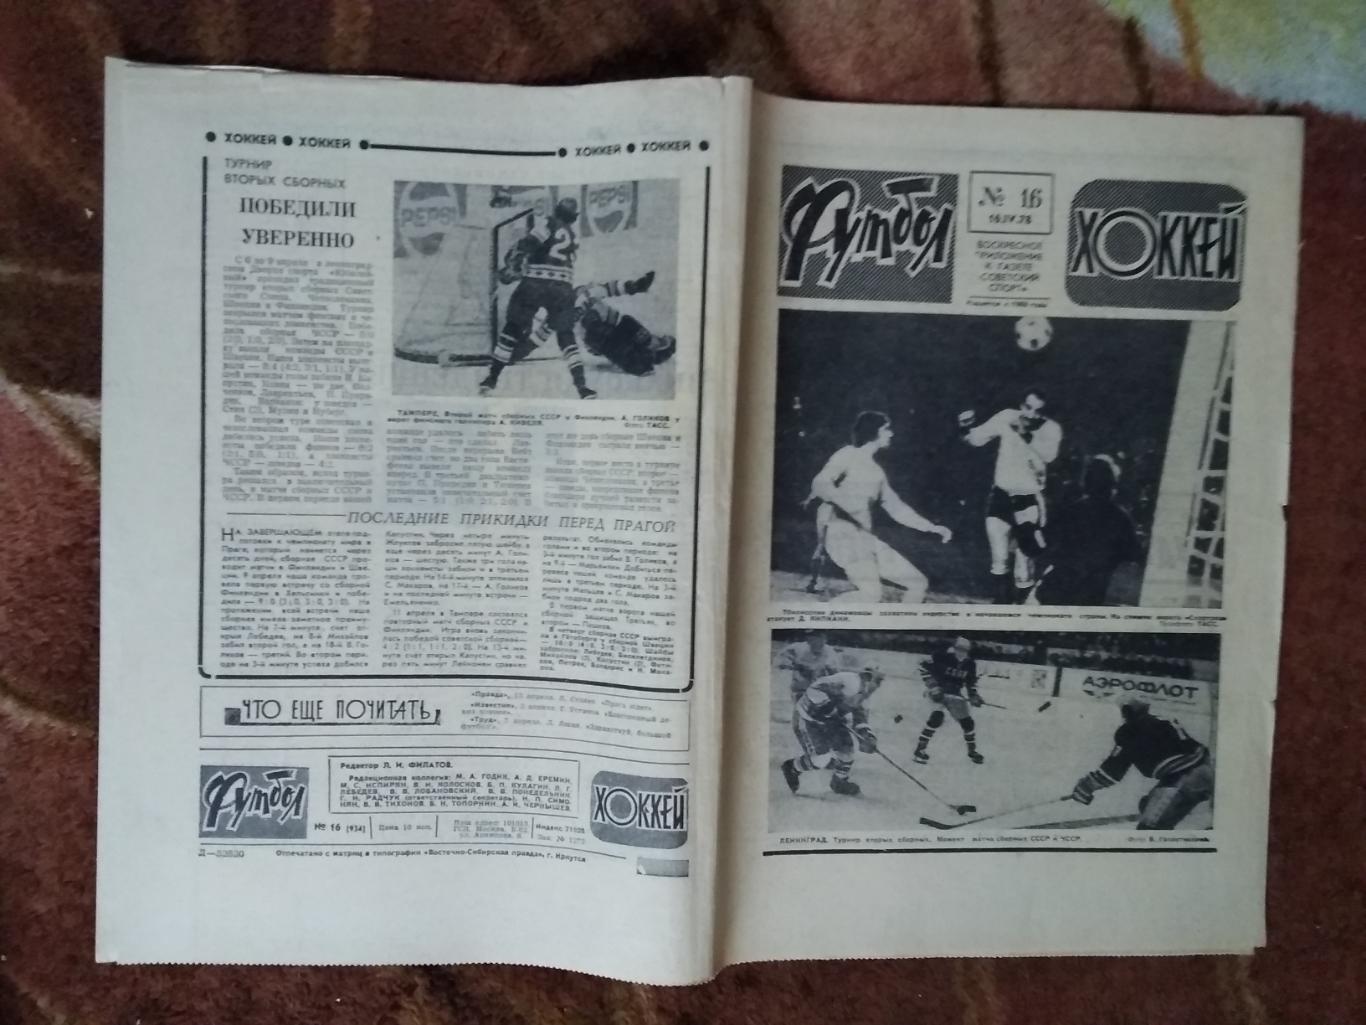 ЕК.Футбол-Хоккей № 16 1978 г. (Аустрия - Динамо Москва КОК).